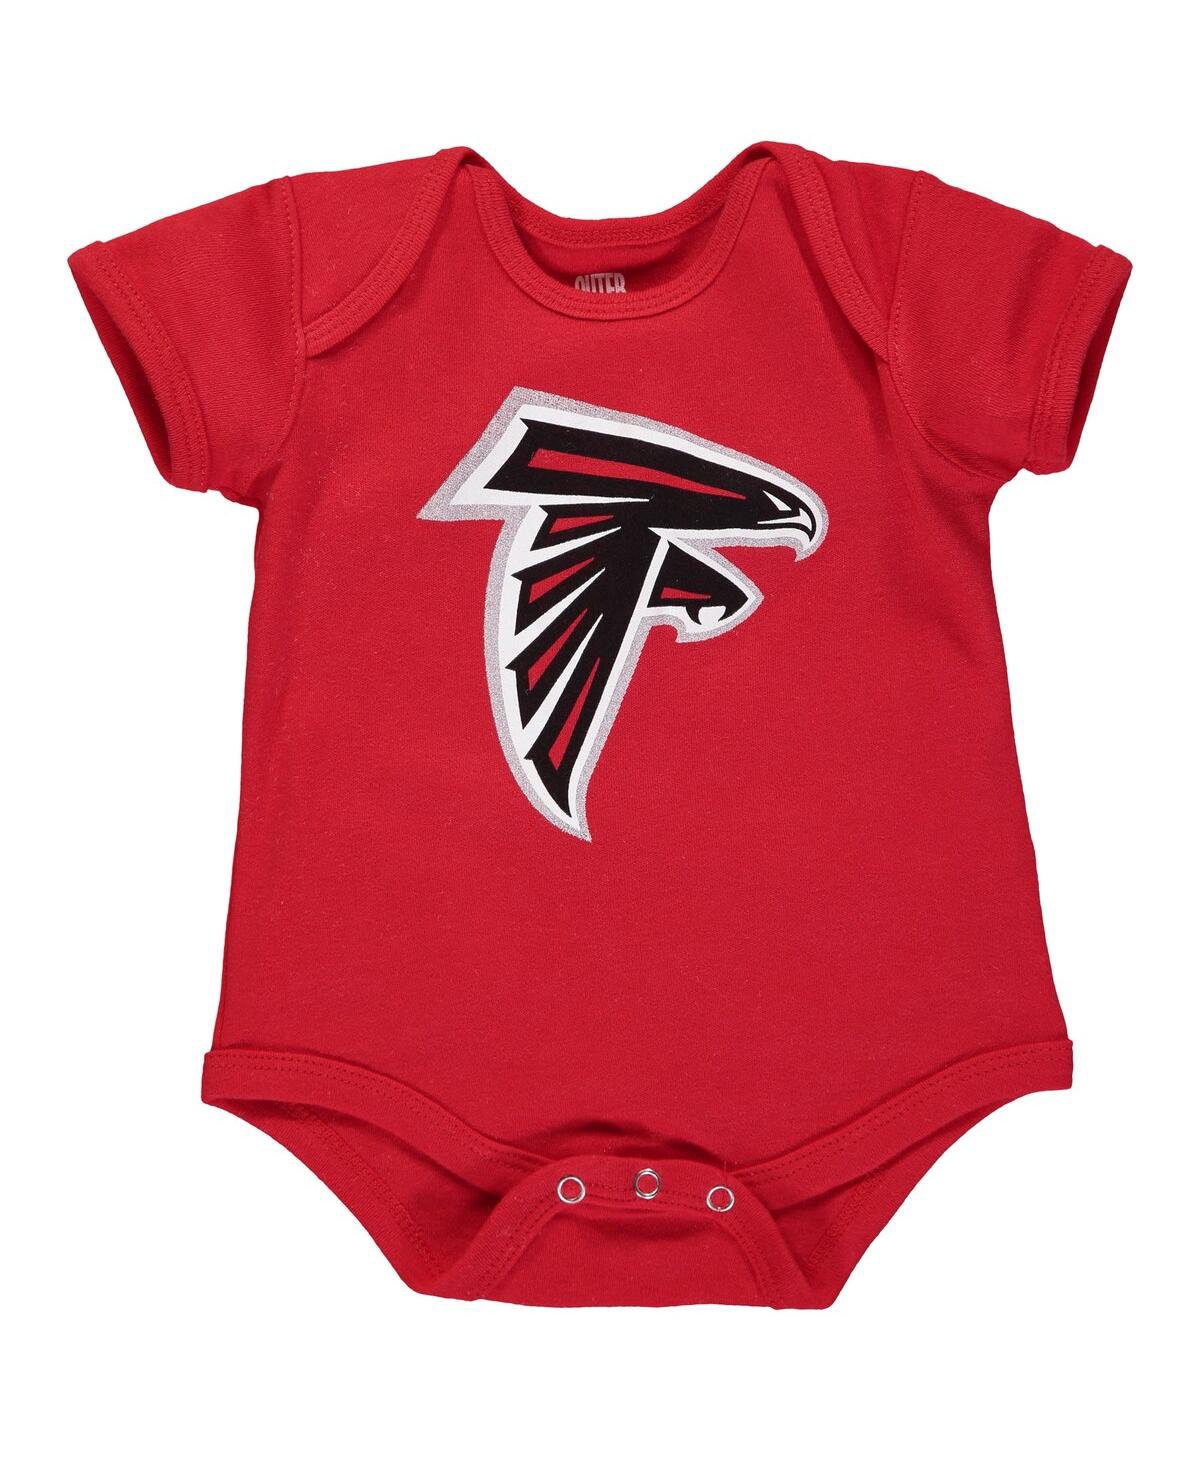 Shop Outerstuff Newborn Boys And Girls Red Atlanta Falcons Team Logo Bodysuit